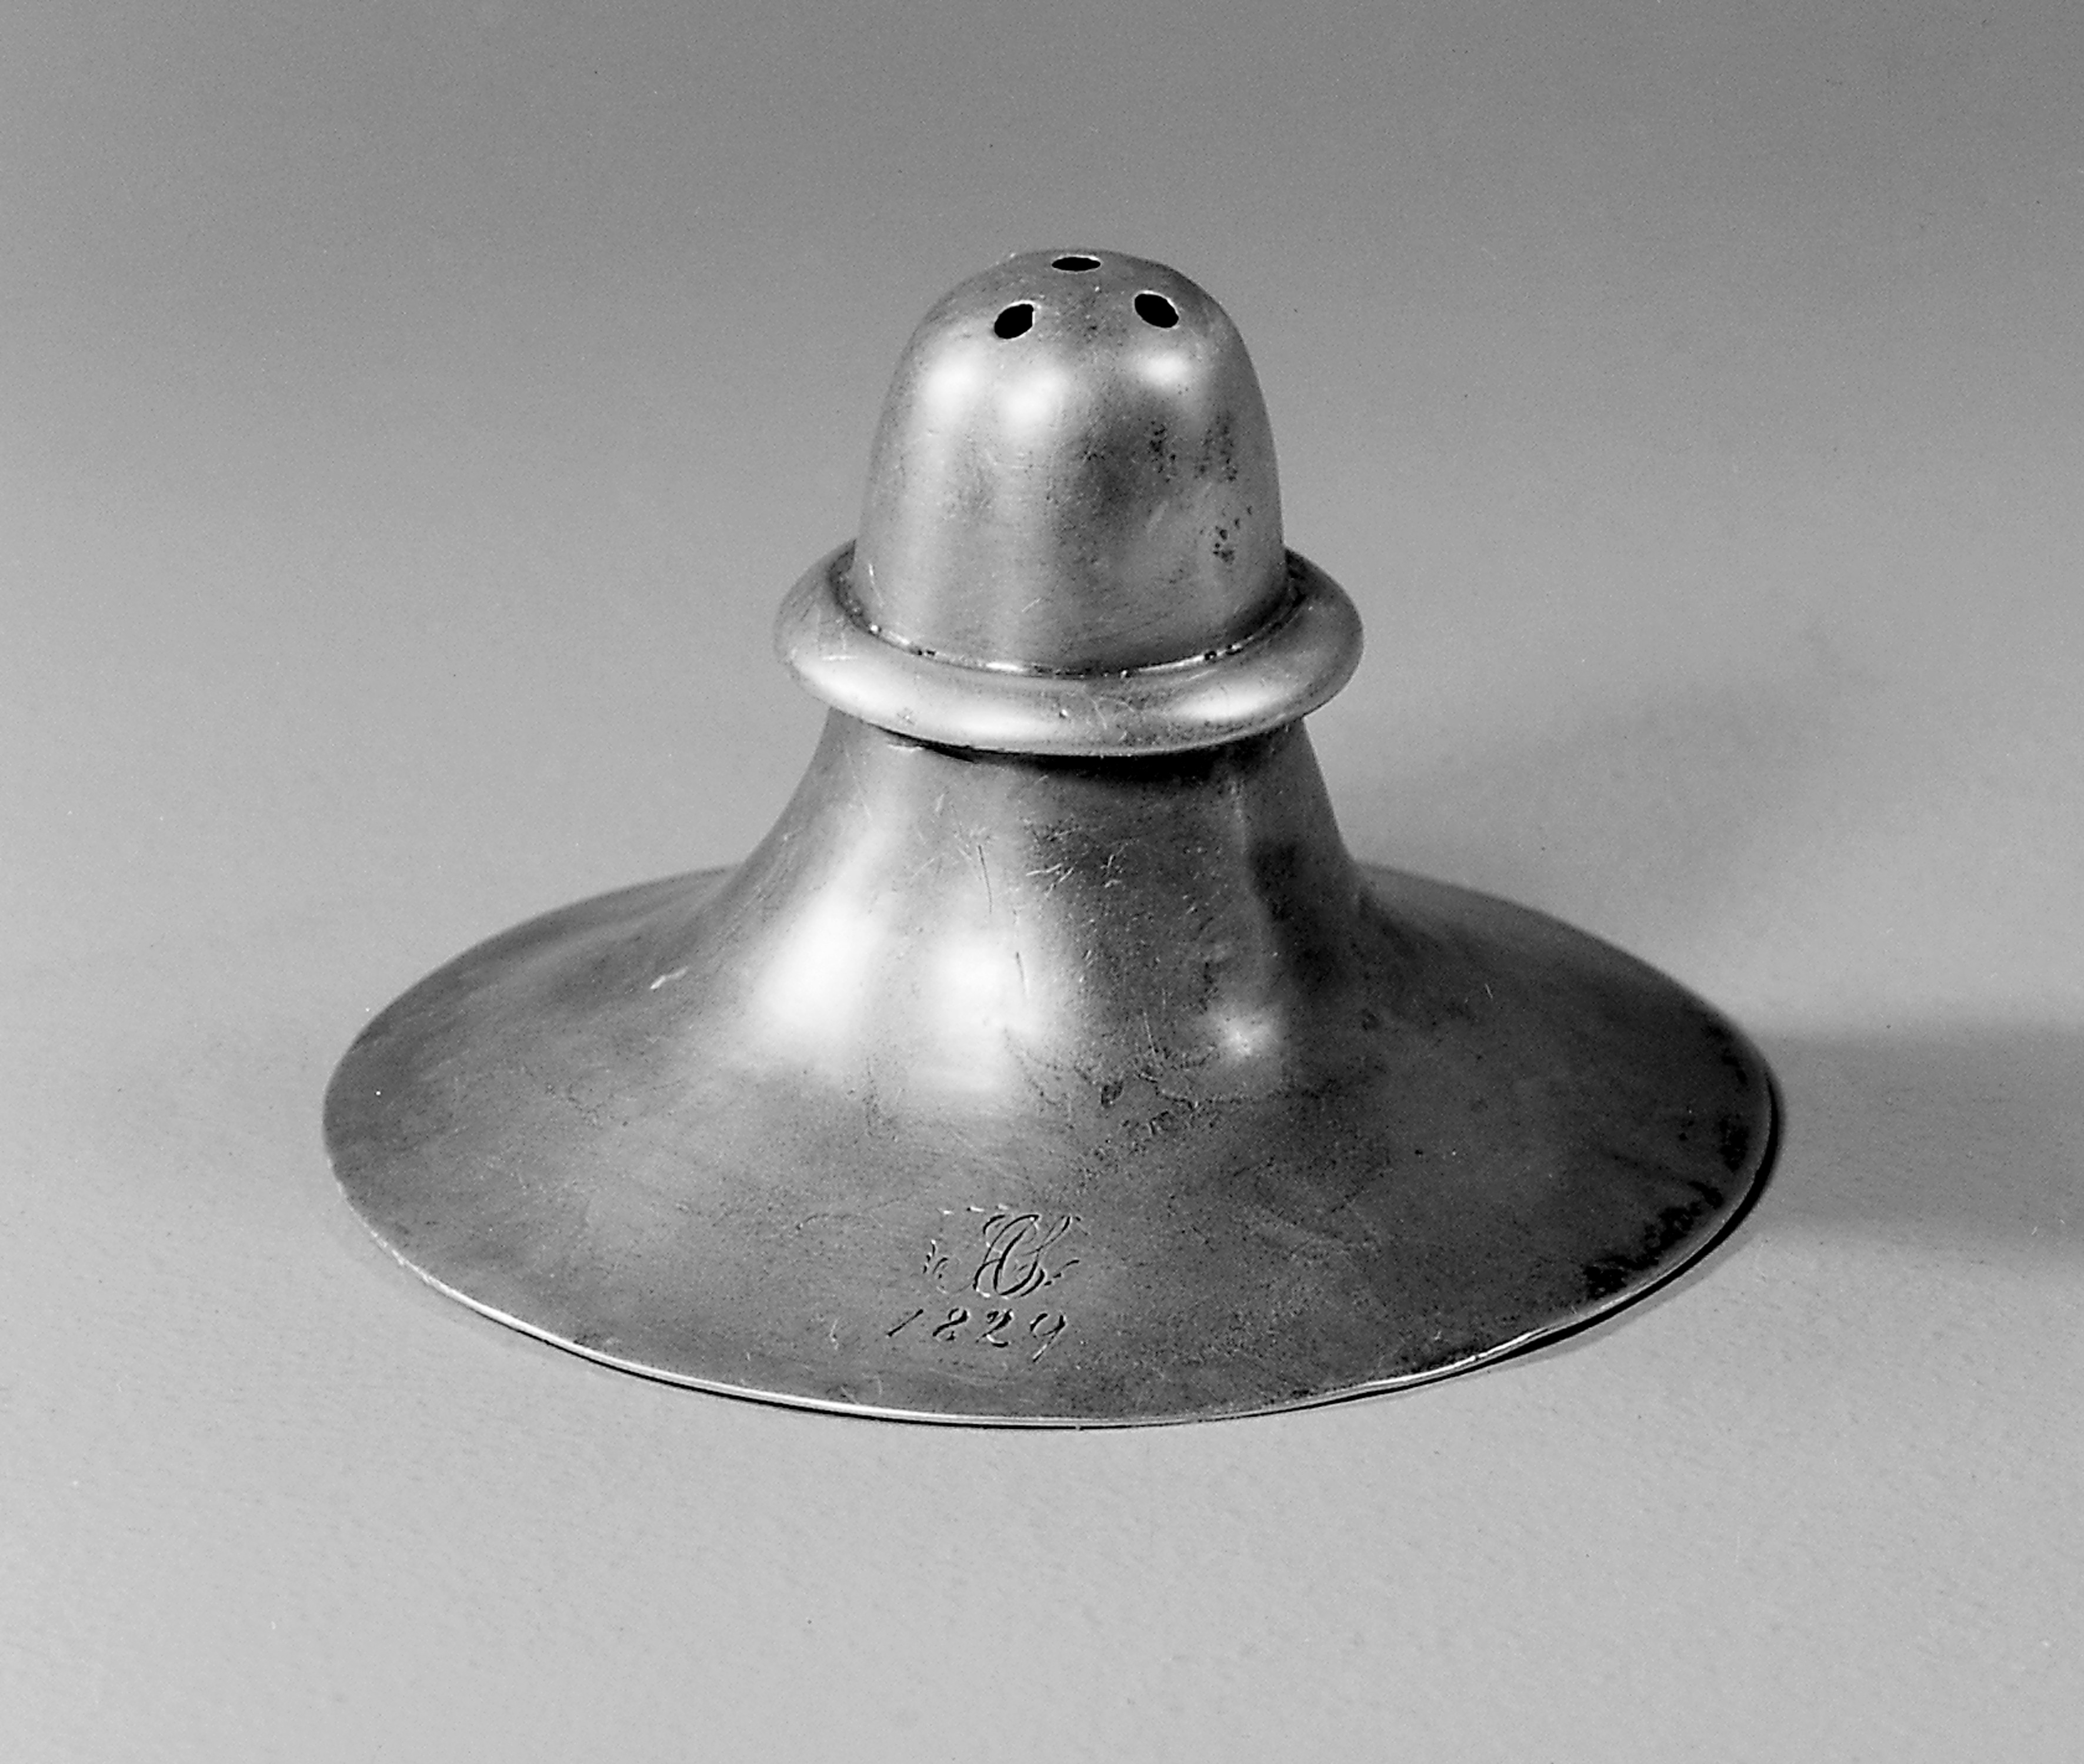 File:Glass nipple shield, Europe Wellcome L0058009.jpg - Wikimedia Commons